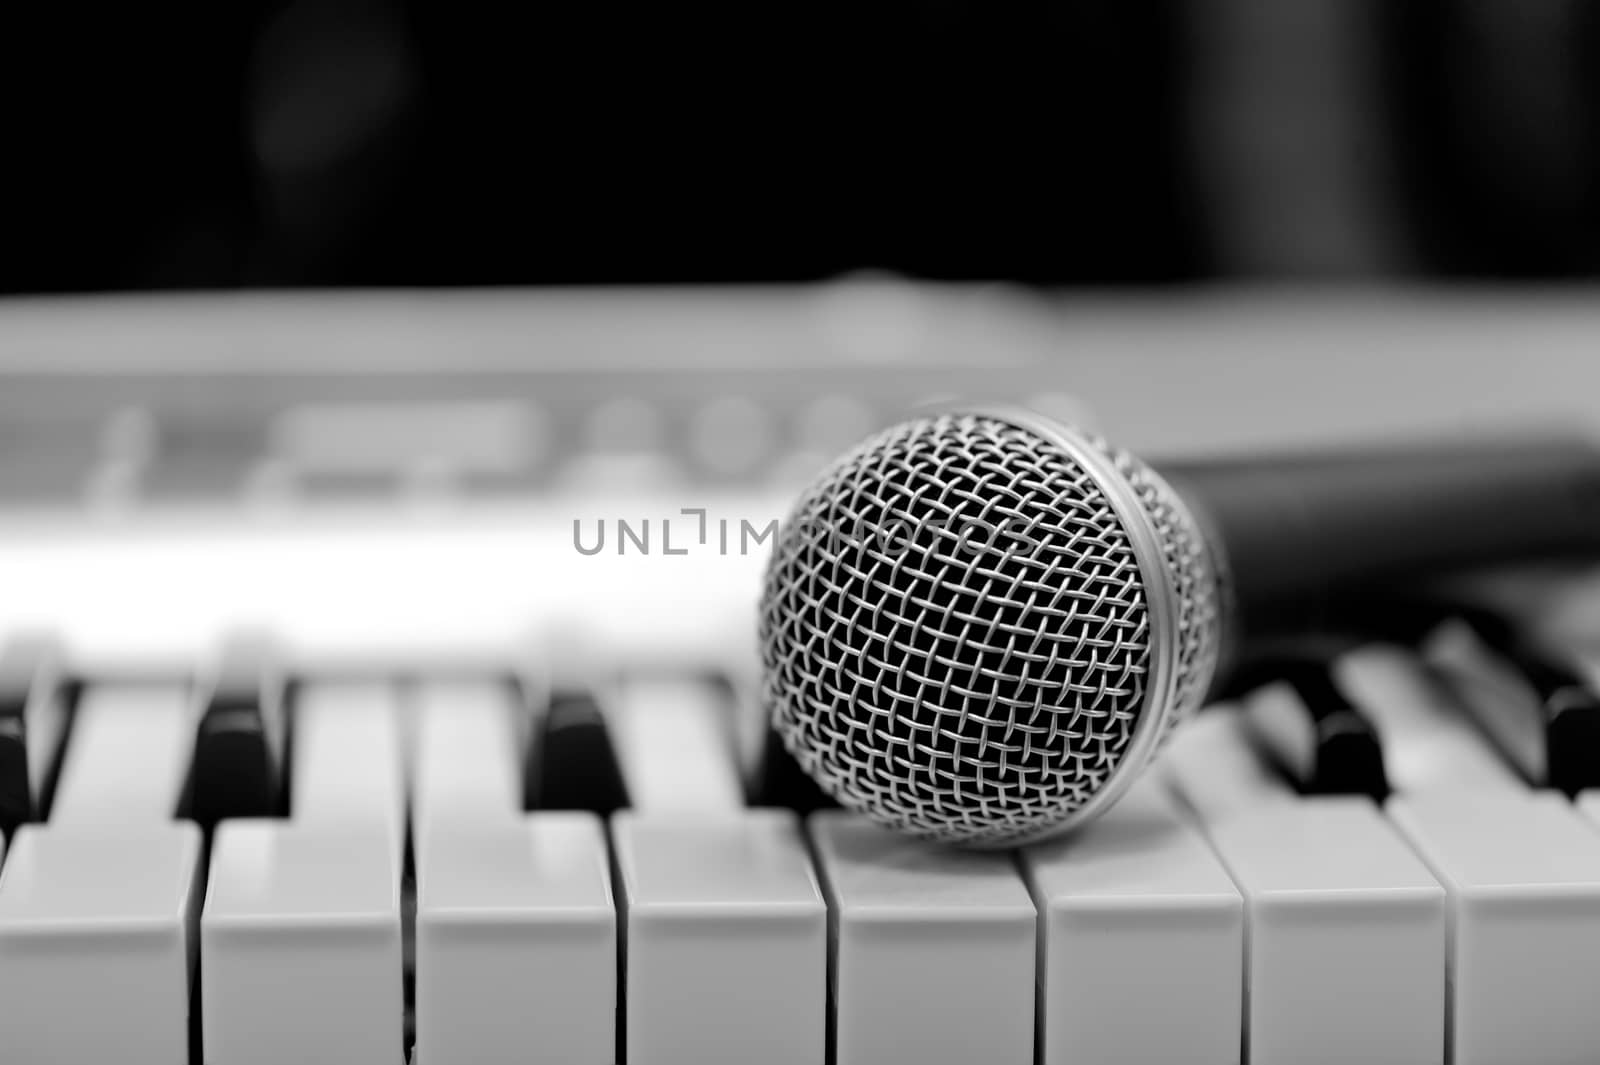 Classical microphone on keyboard by byrdyak